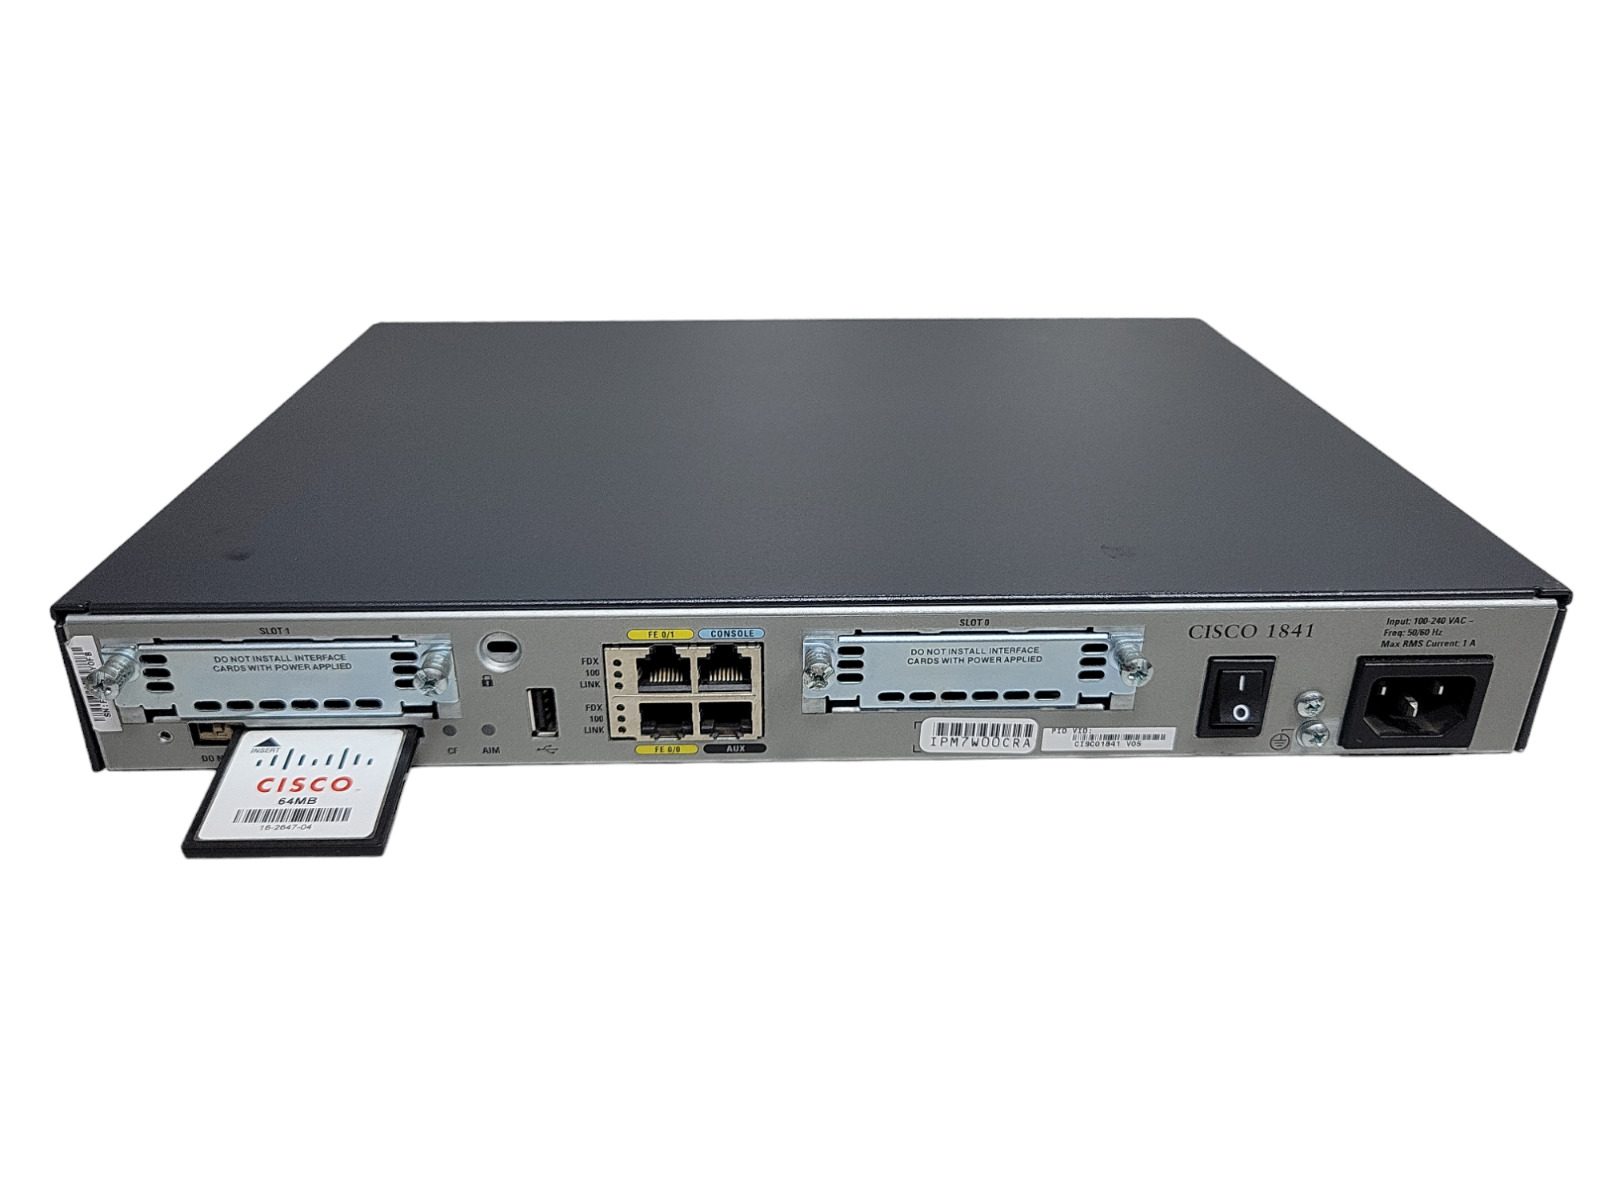 Cisco 1841 1800 Series Modular Router 2-Port Fast Ethernet w/Flash Card